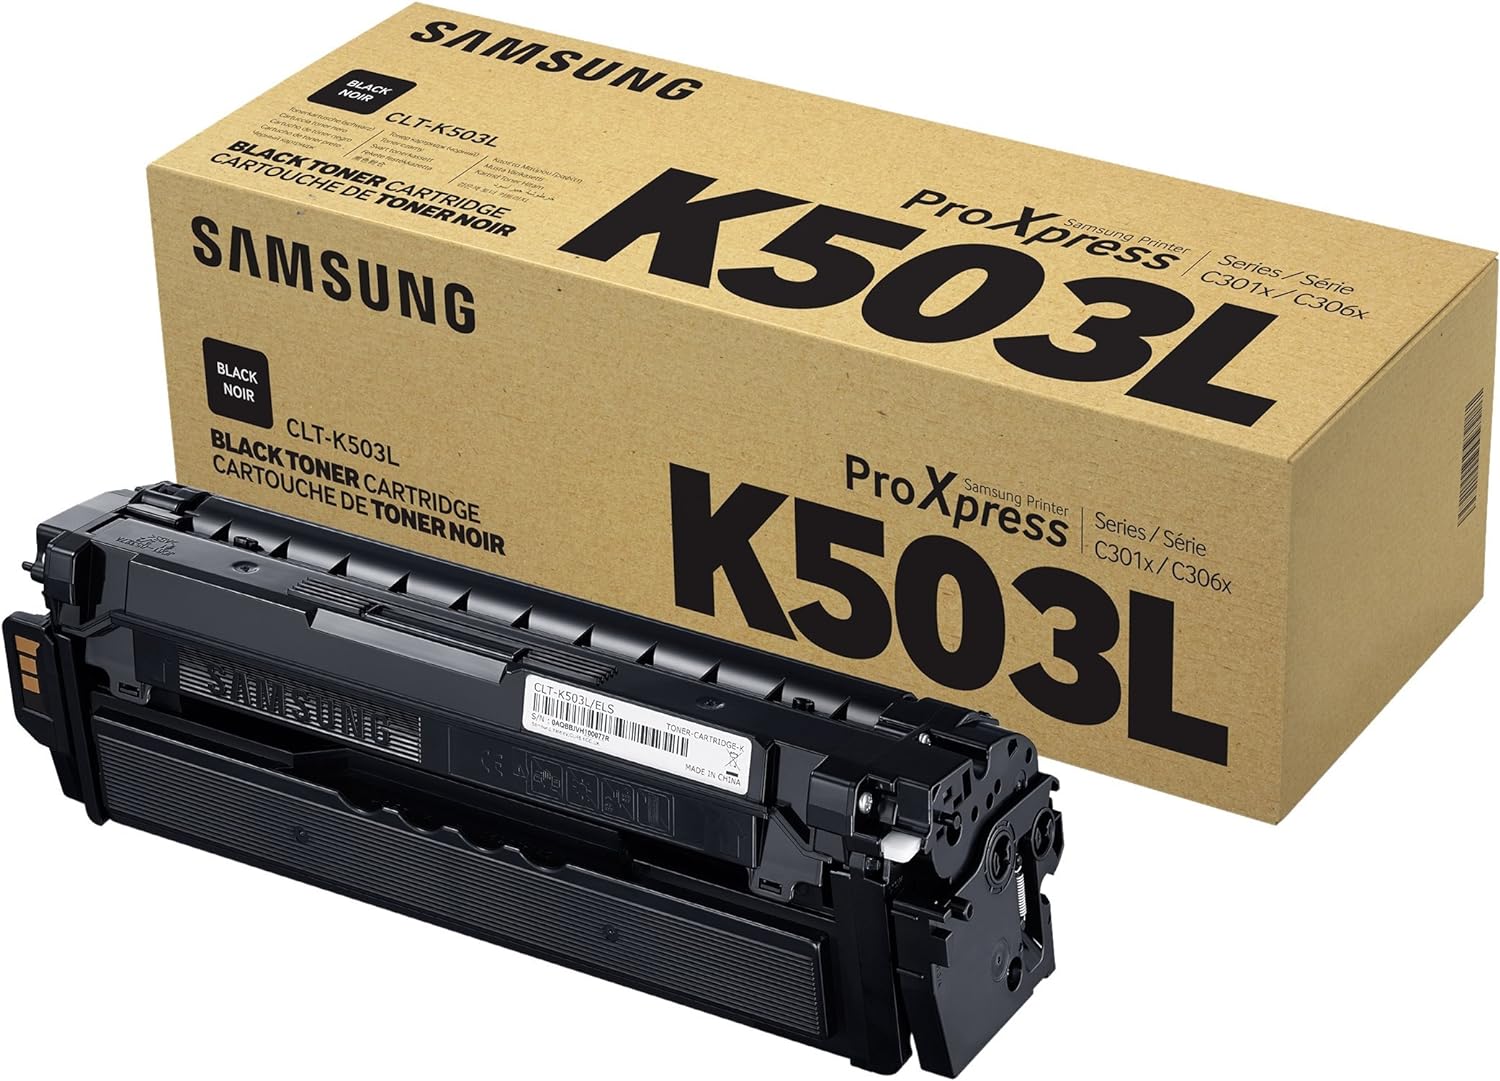 Samsung CLTK503L/XAA Black Toner Cartridge For Proxpress Series Printer - Samsung Parts USA